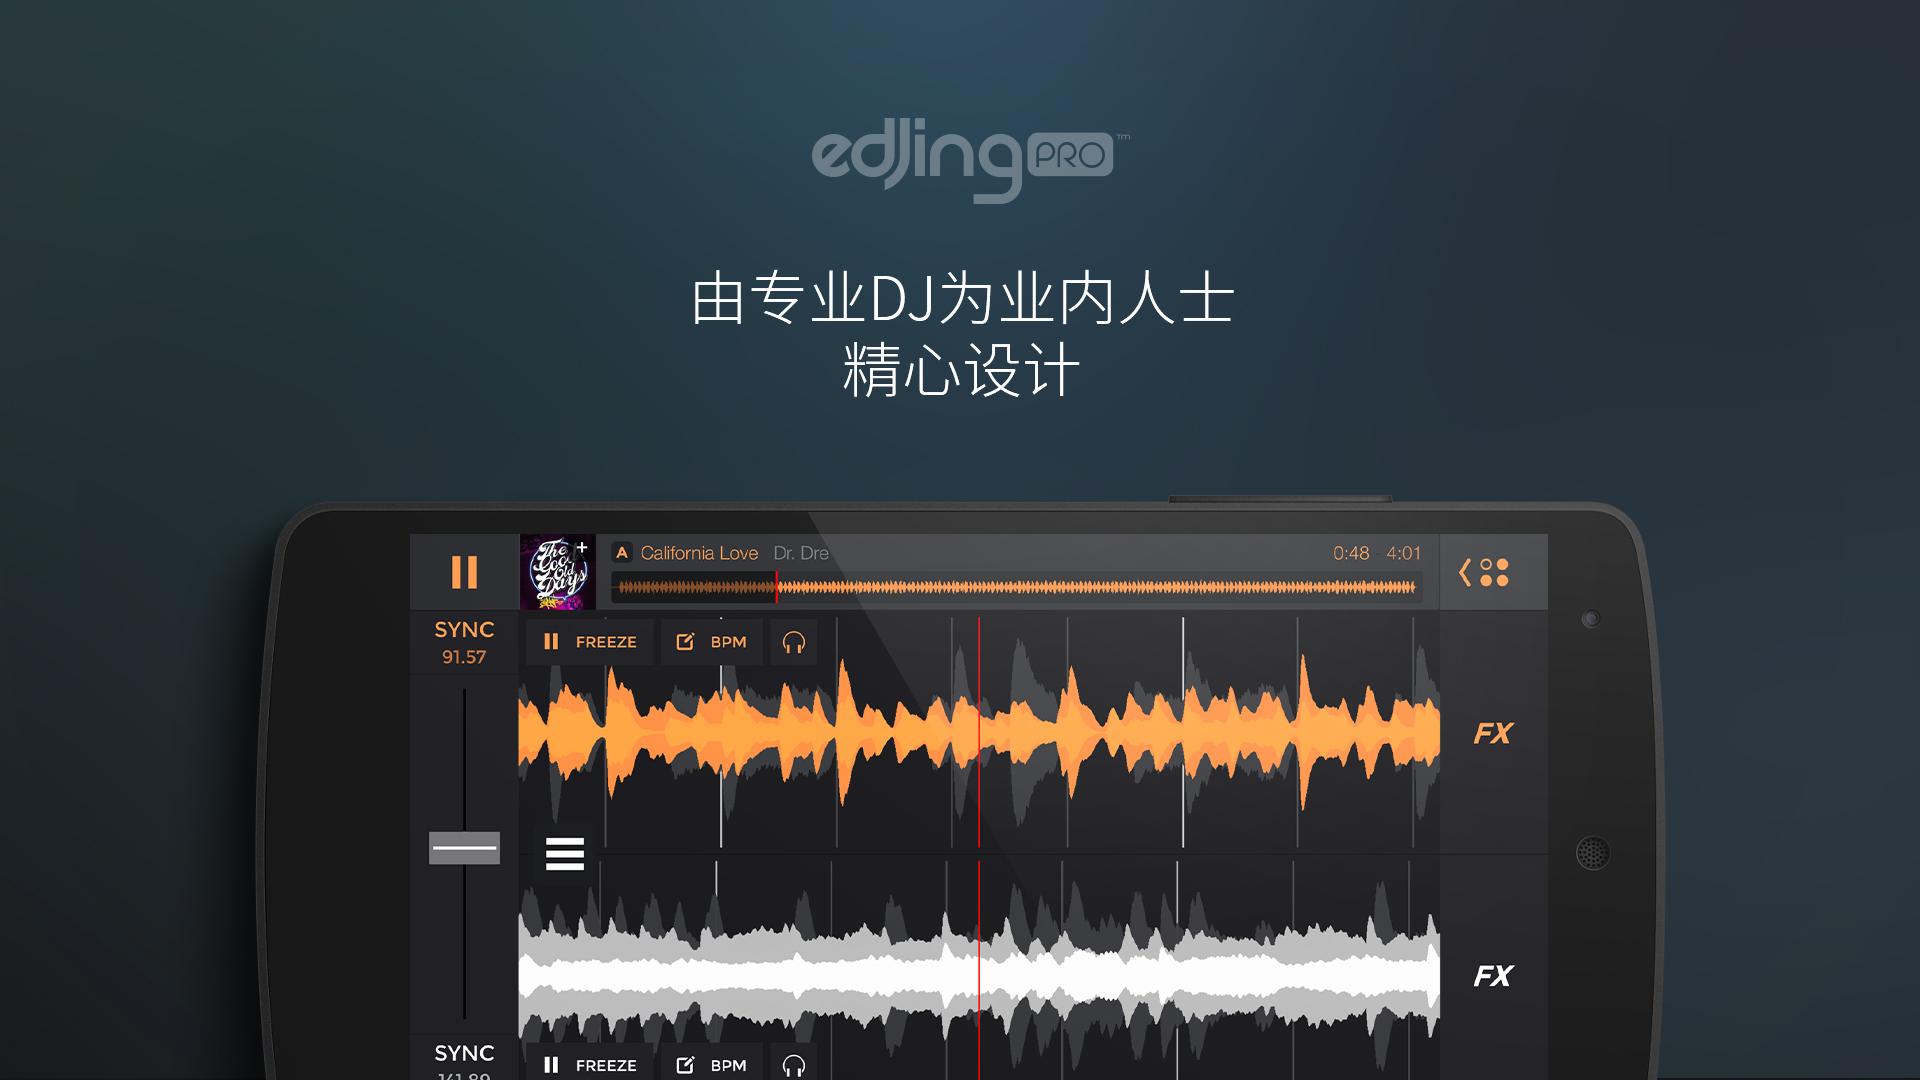 Android application edjing PRO LE - Music DJ mixer screenshort